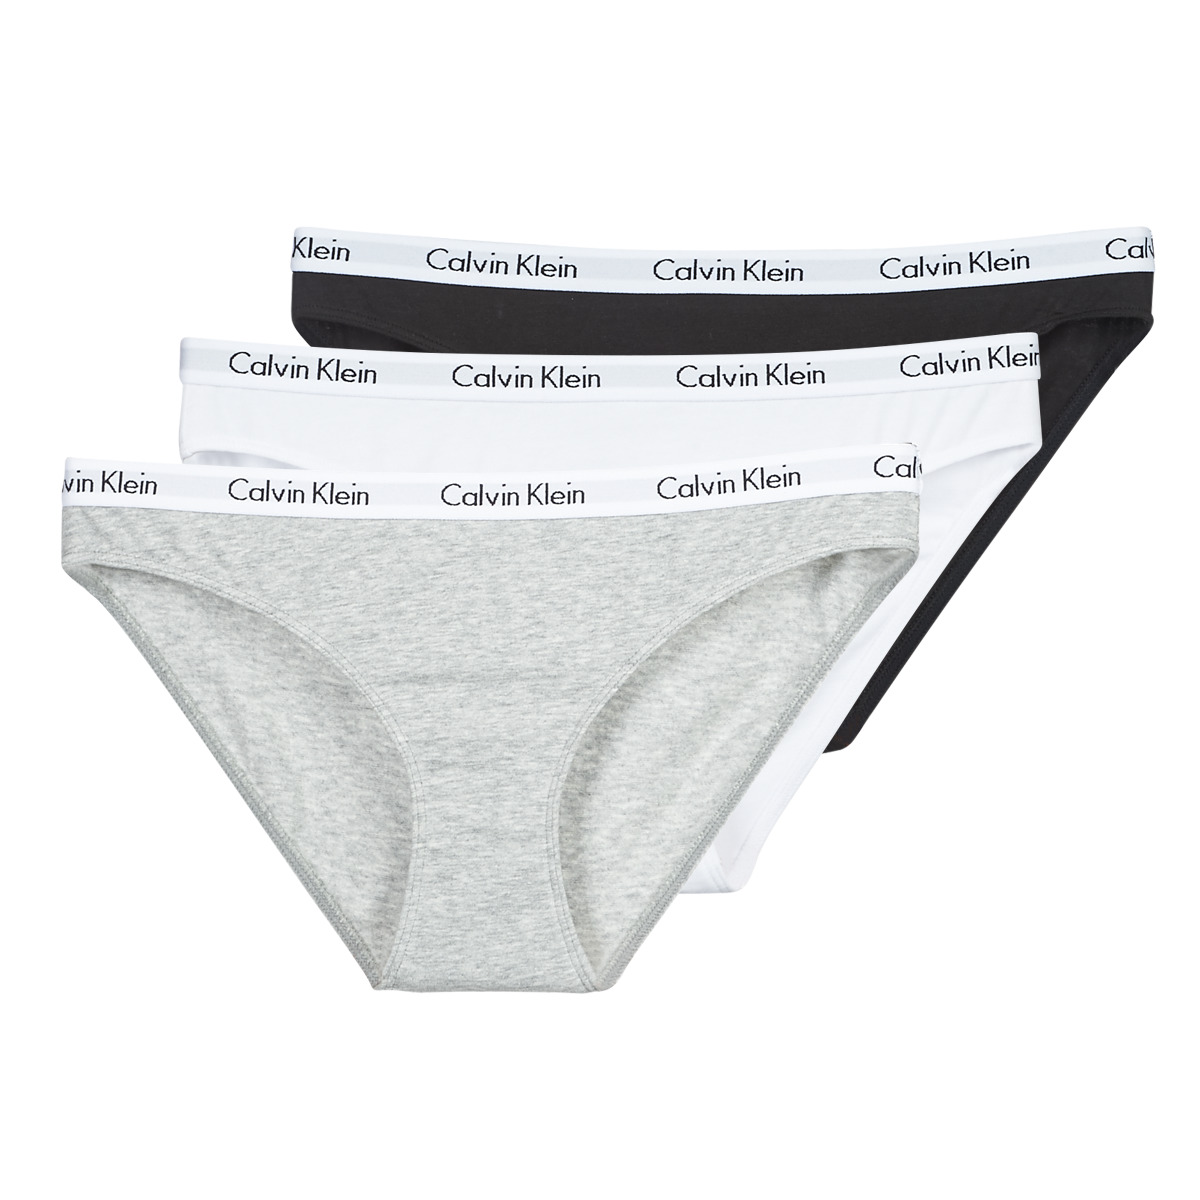 Calvin Klein Jeans BIKINI X 3 Sort / Hvid / Grå / Marmoreret - Gratis fragt | Spartoo.dk ! - Undertøj Trusser Dame 280,00 Kr